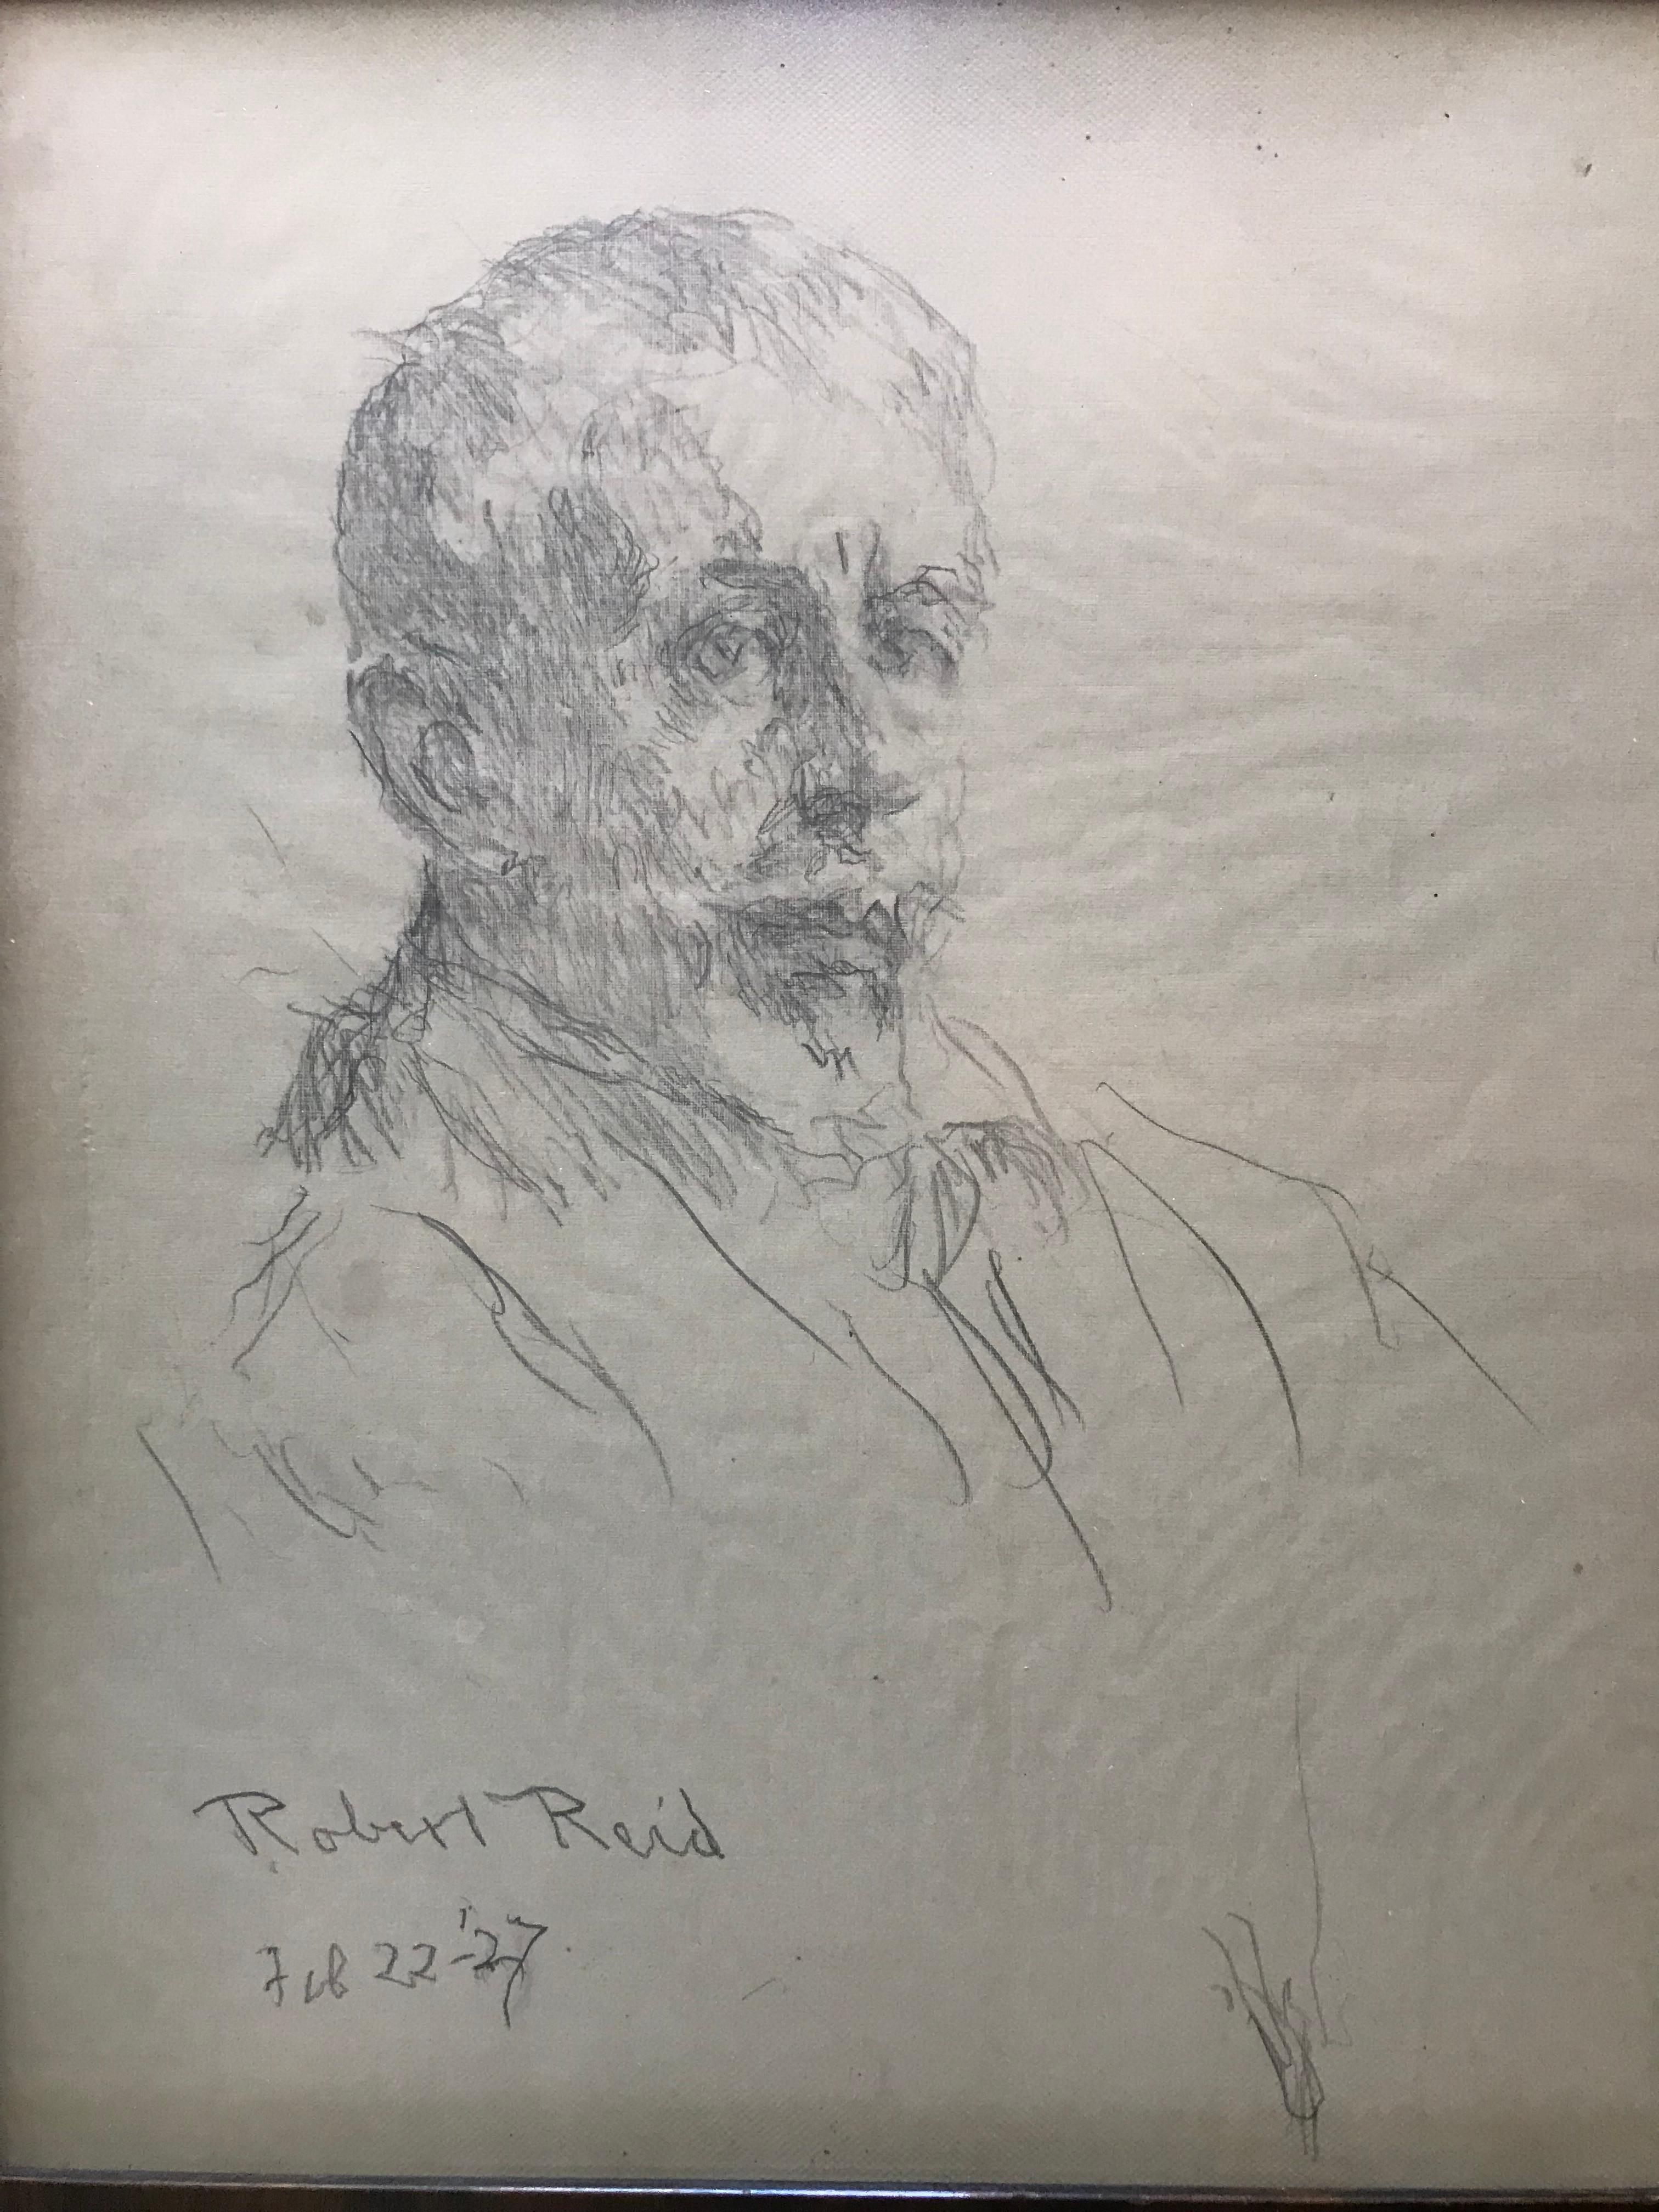 Selbstporträt des Self Portraits, 22. Februar 1927 – Art von Robert Lewis Reid